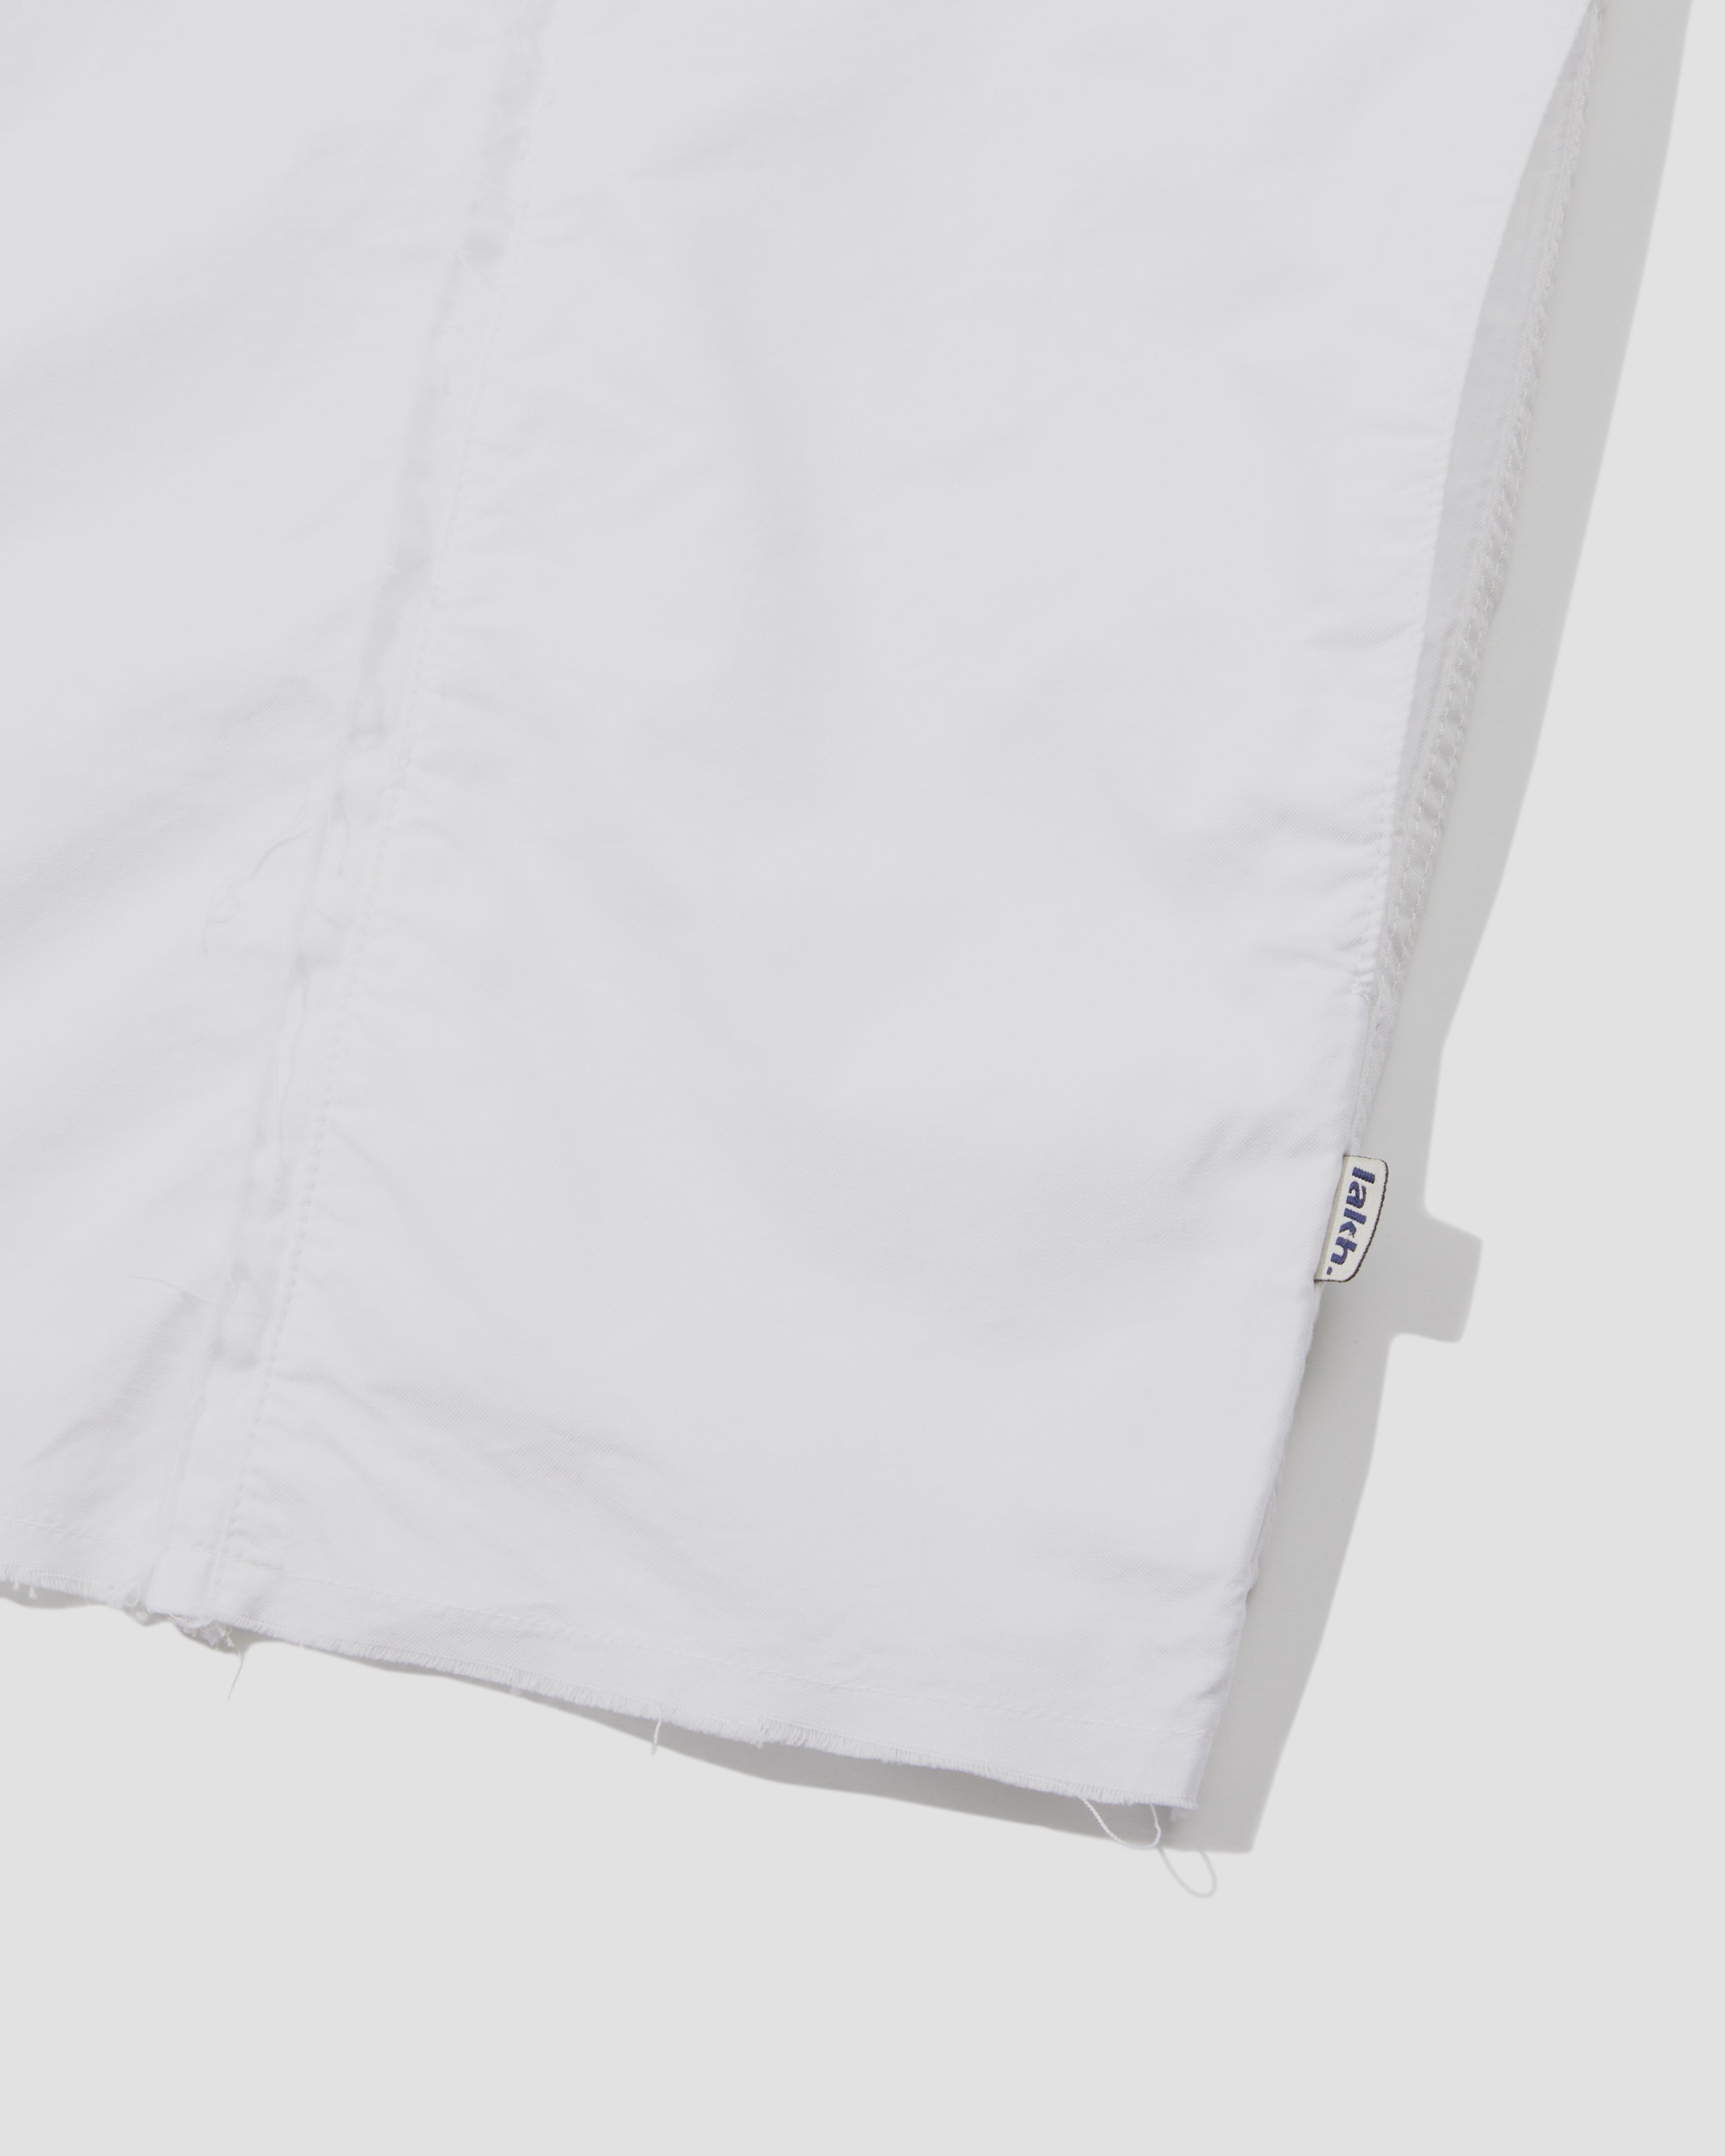 Raw Edge L/S Patch Shirt - White